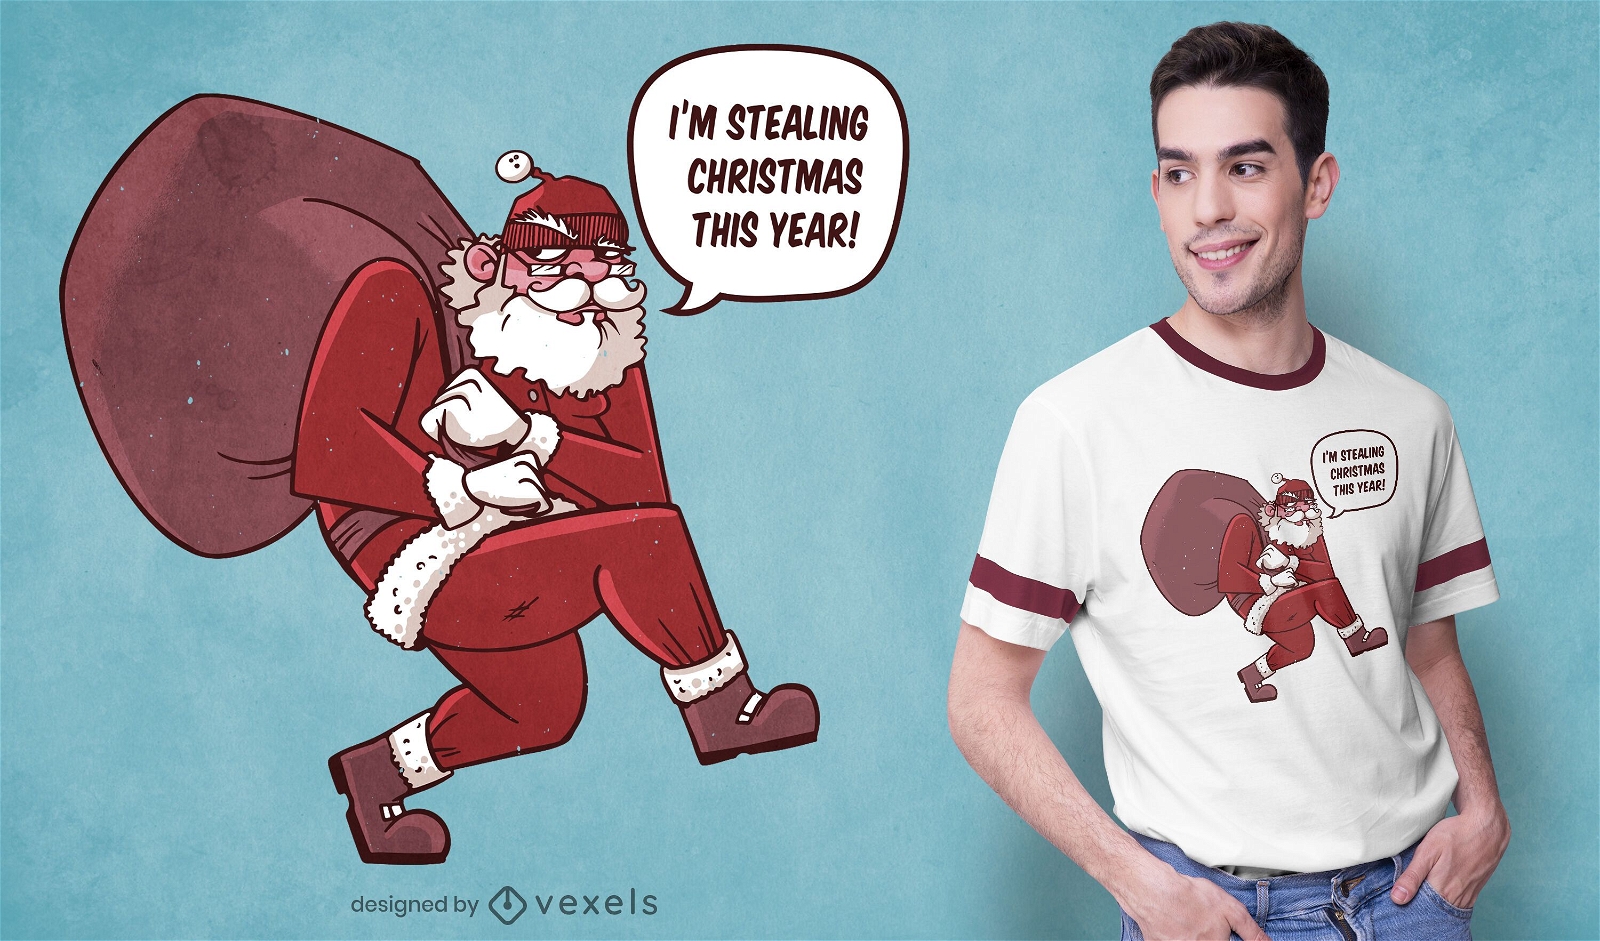 Stealing santa t-shirt design